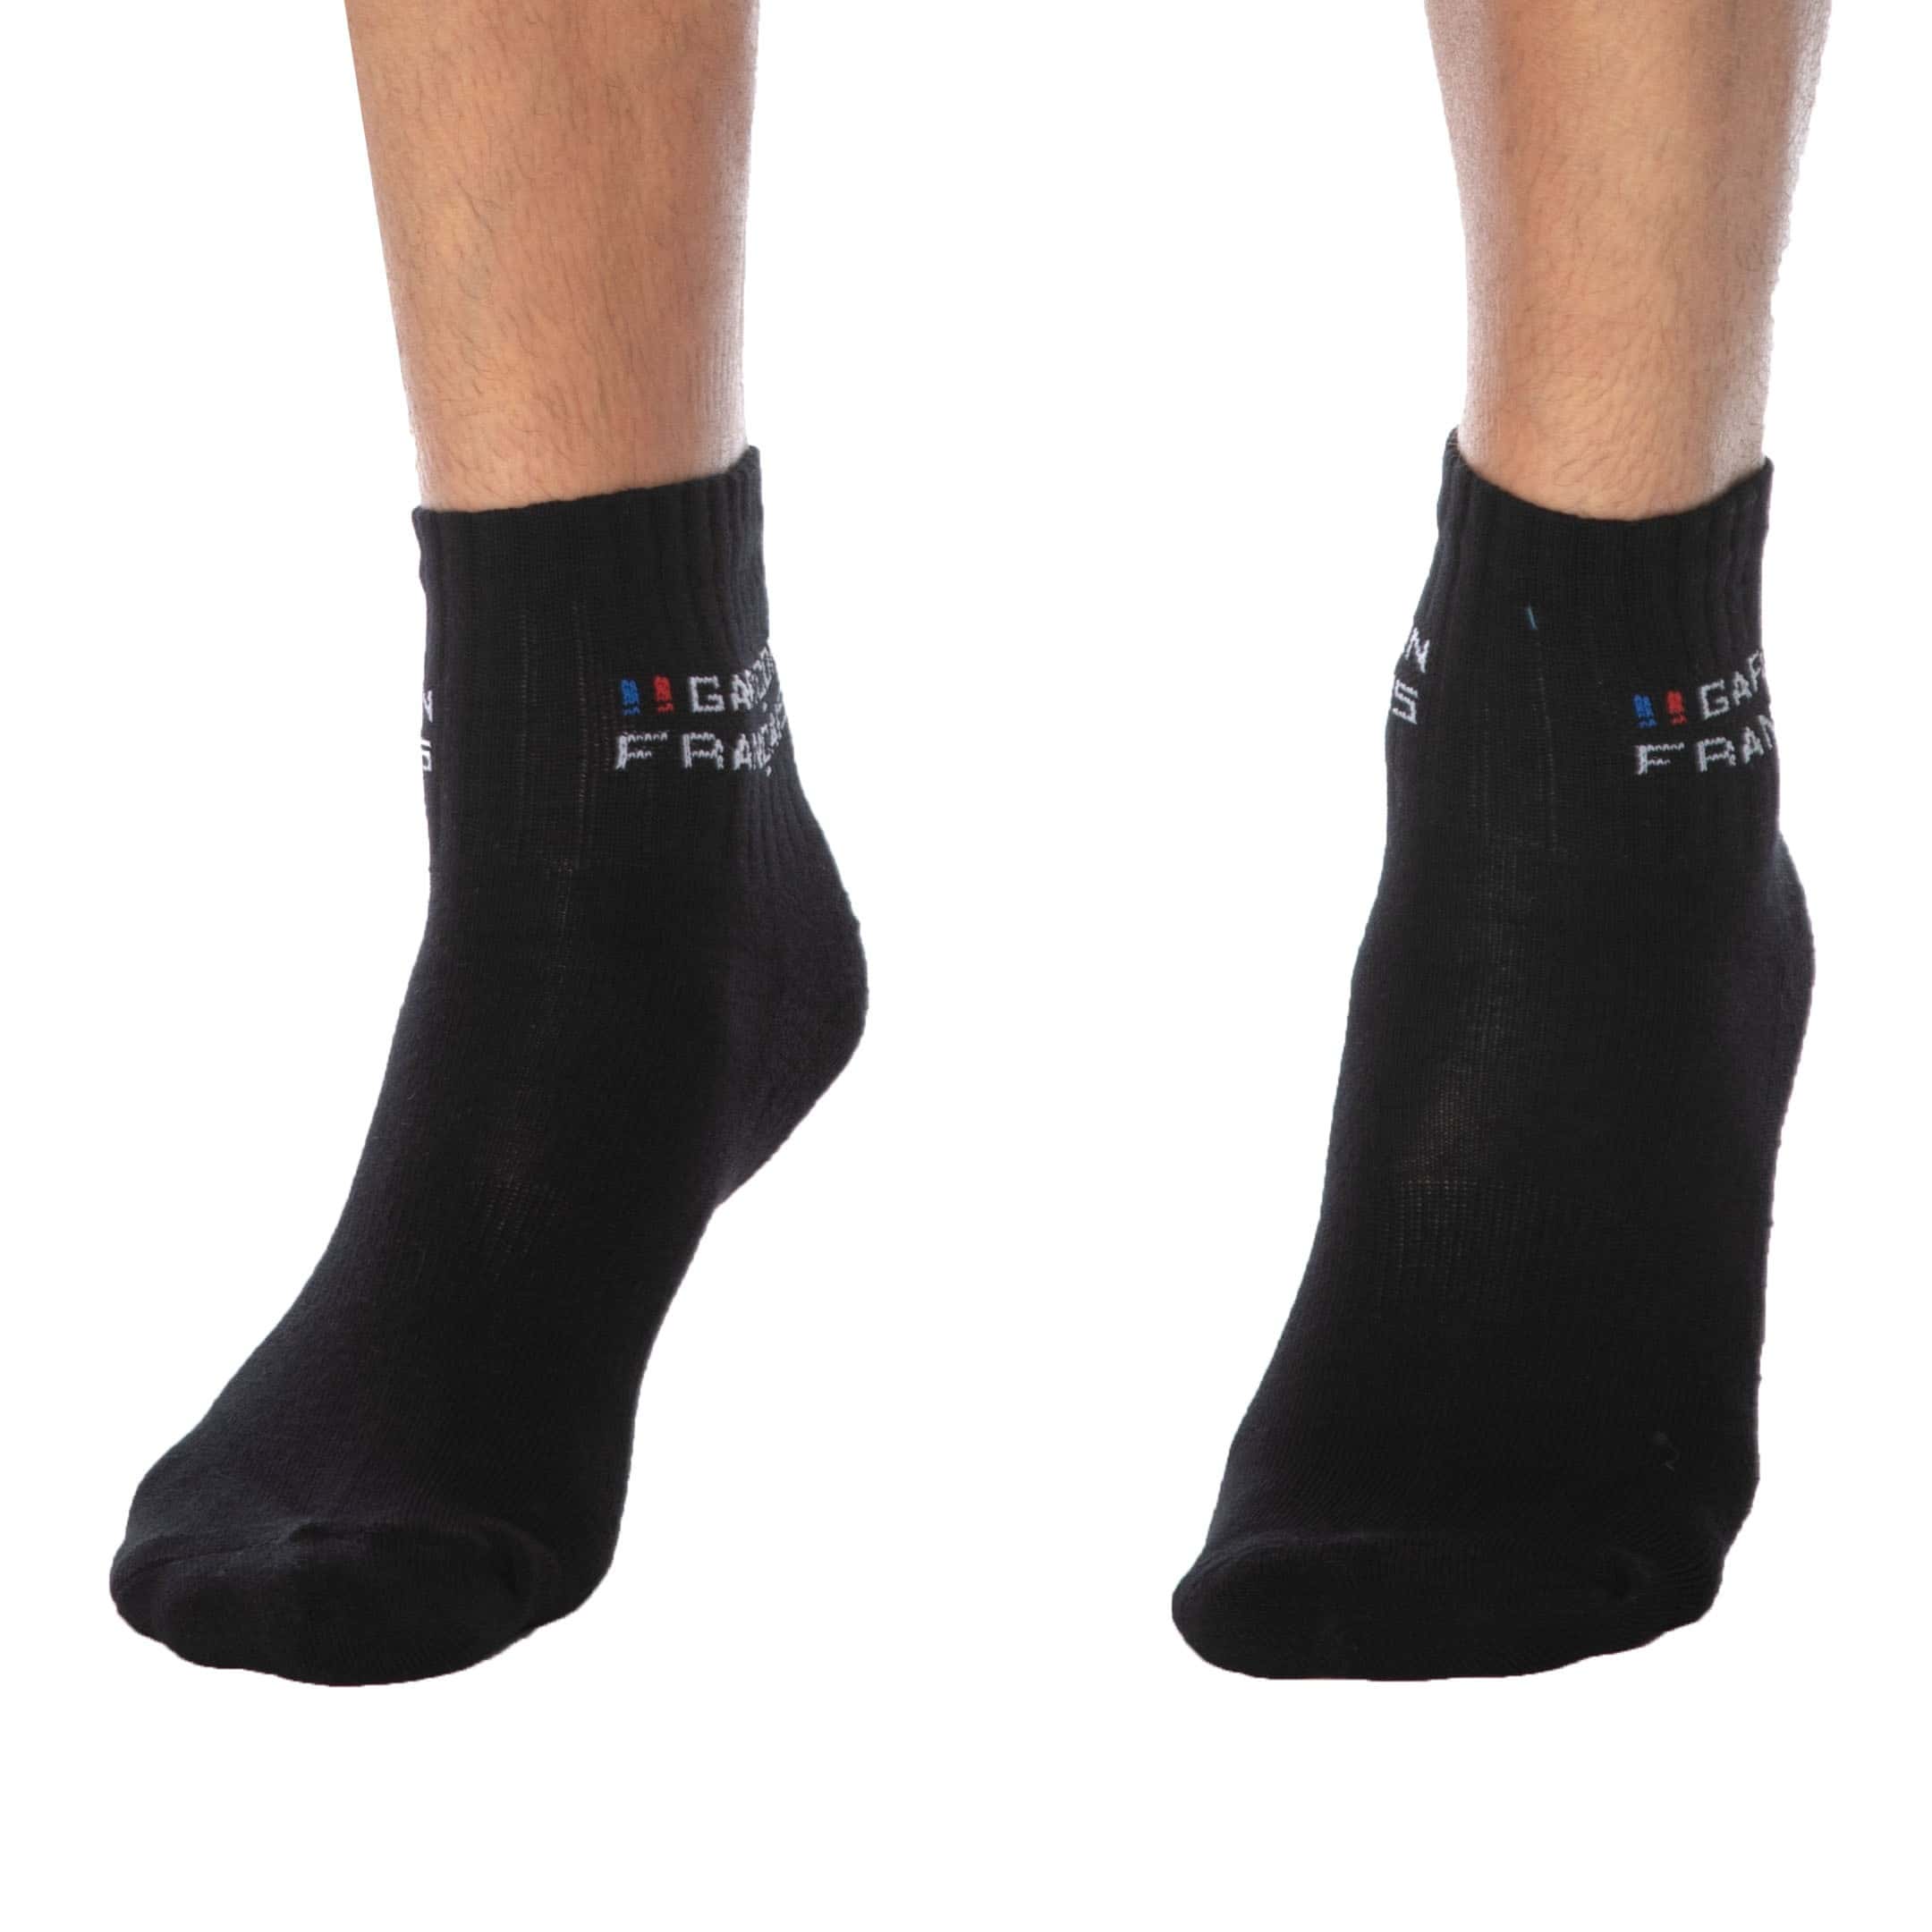 Garçon Français Ankle Socks - Black | INDERWEAR